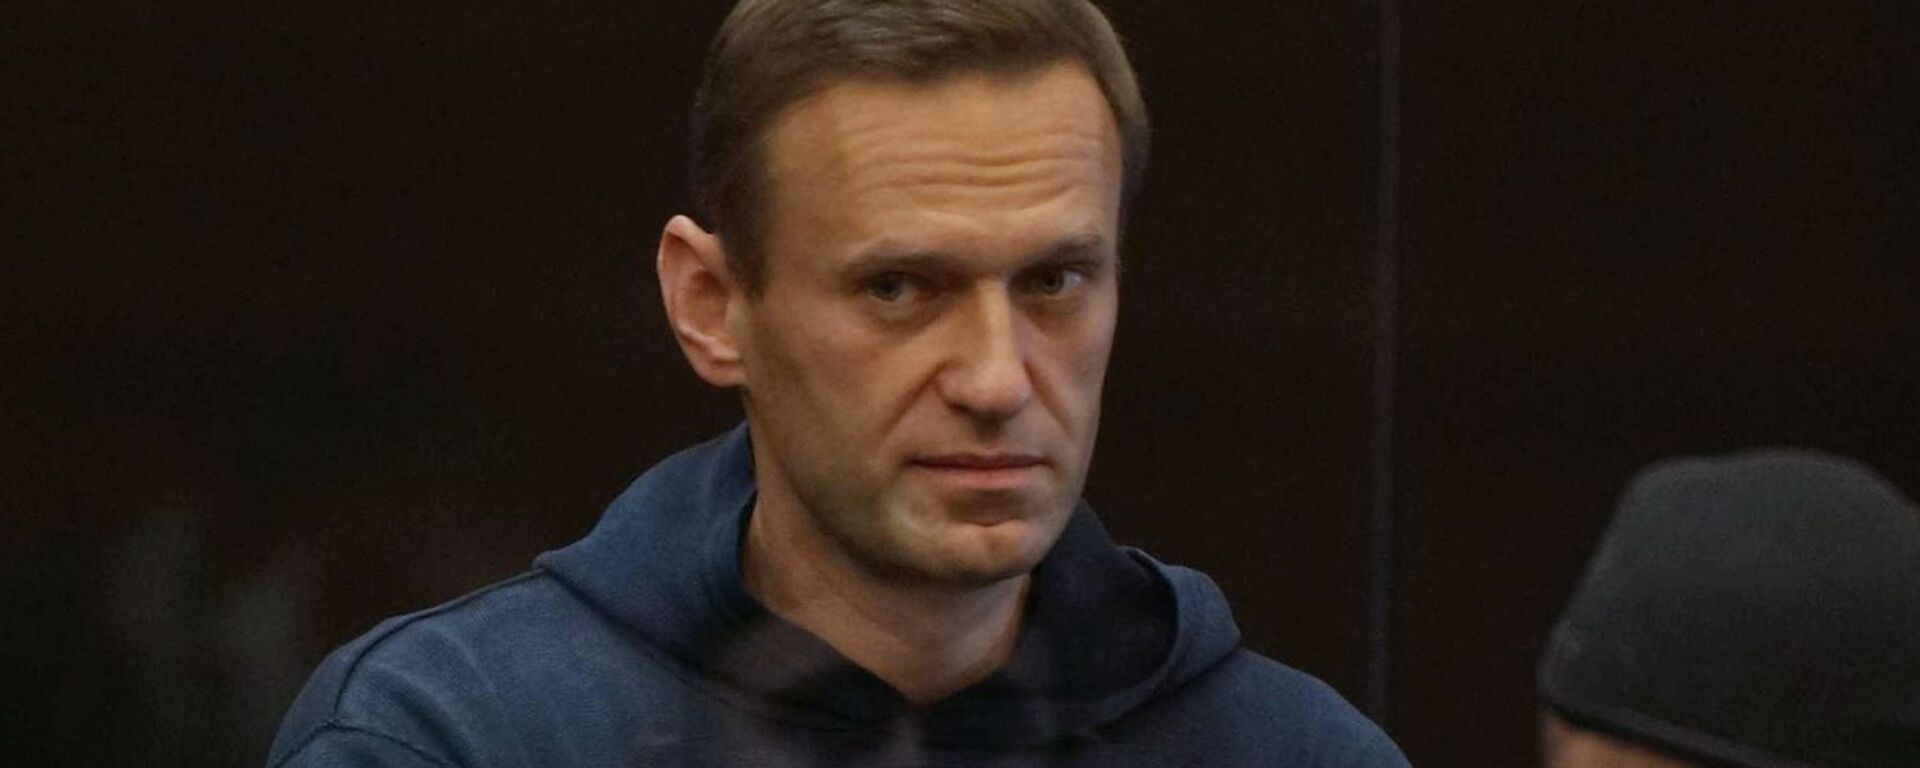 Alexéi Navalni, opositor ruso - Sputnik Mundo, 1920, 12.03.2021